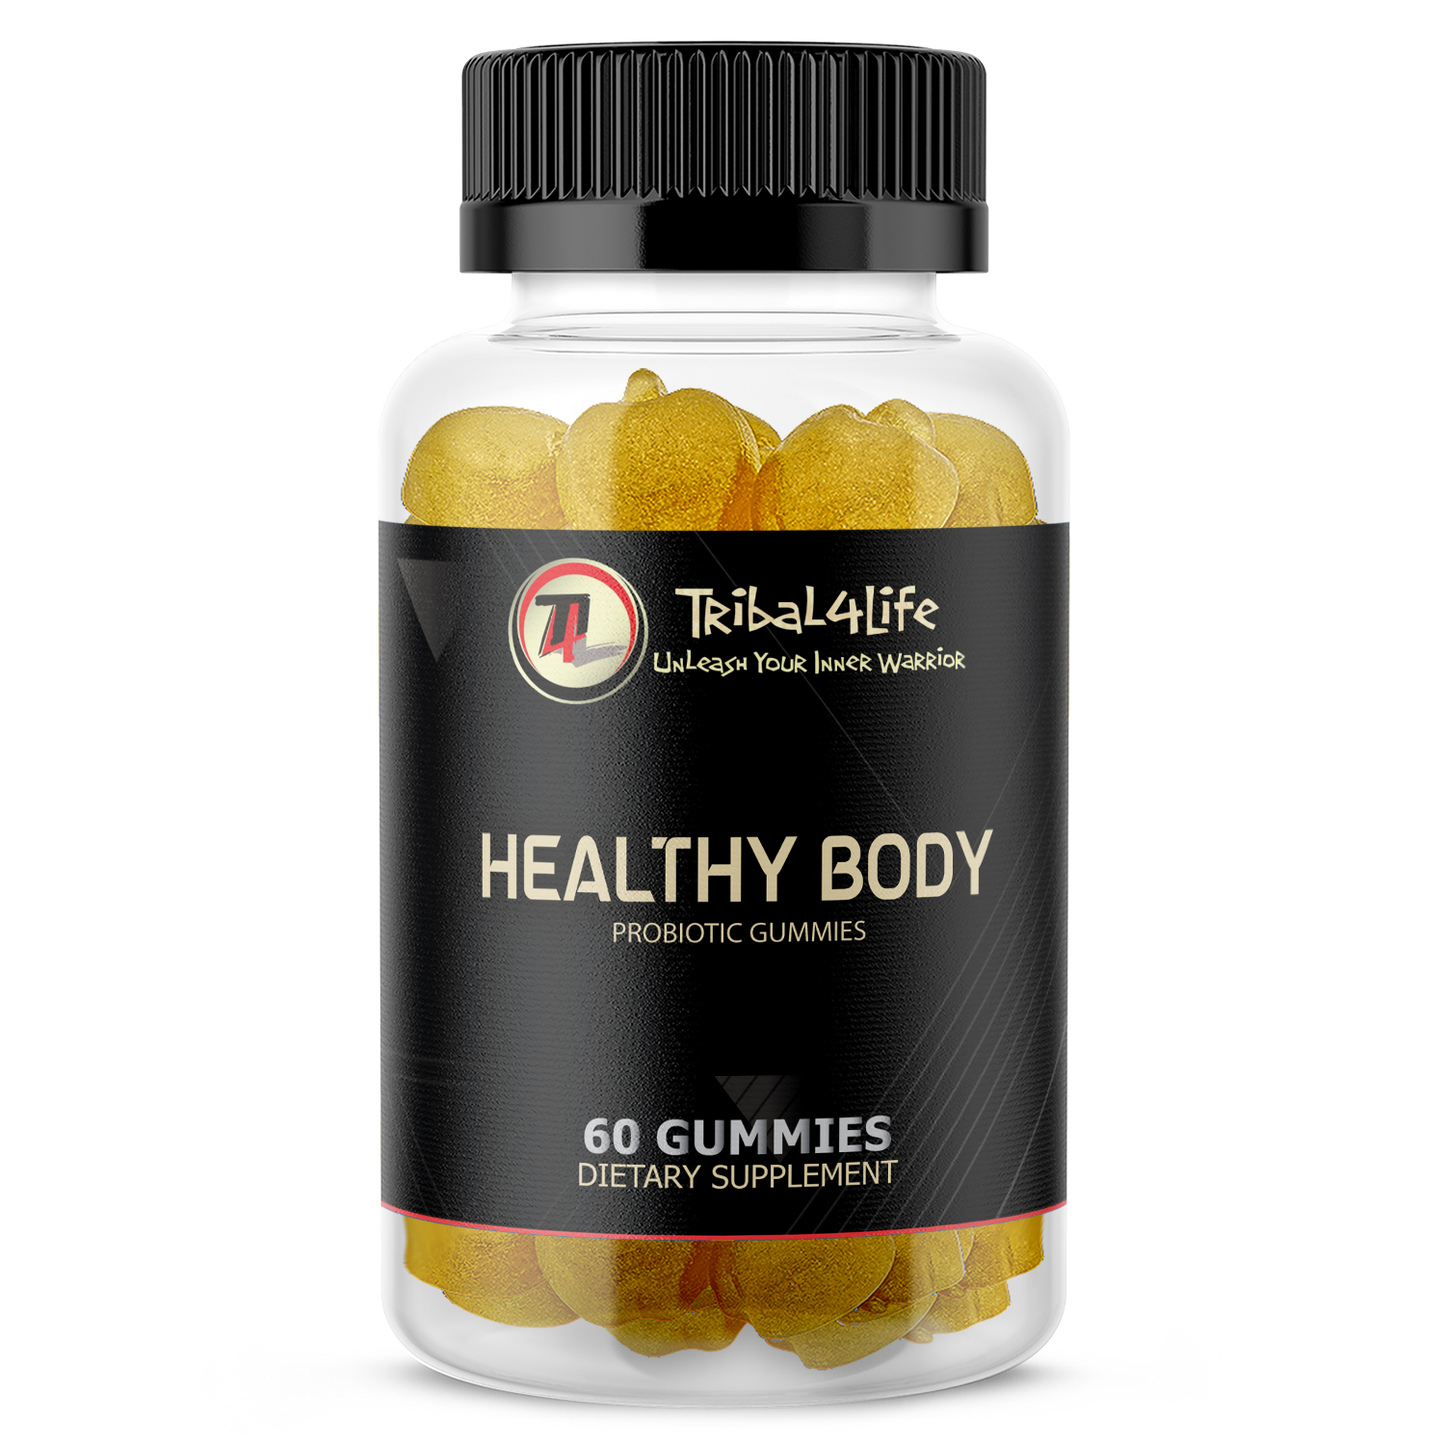 HEALTHY BODY - Probiotic Gummies